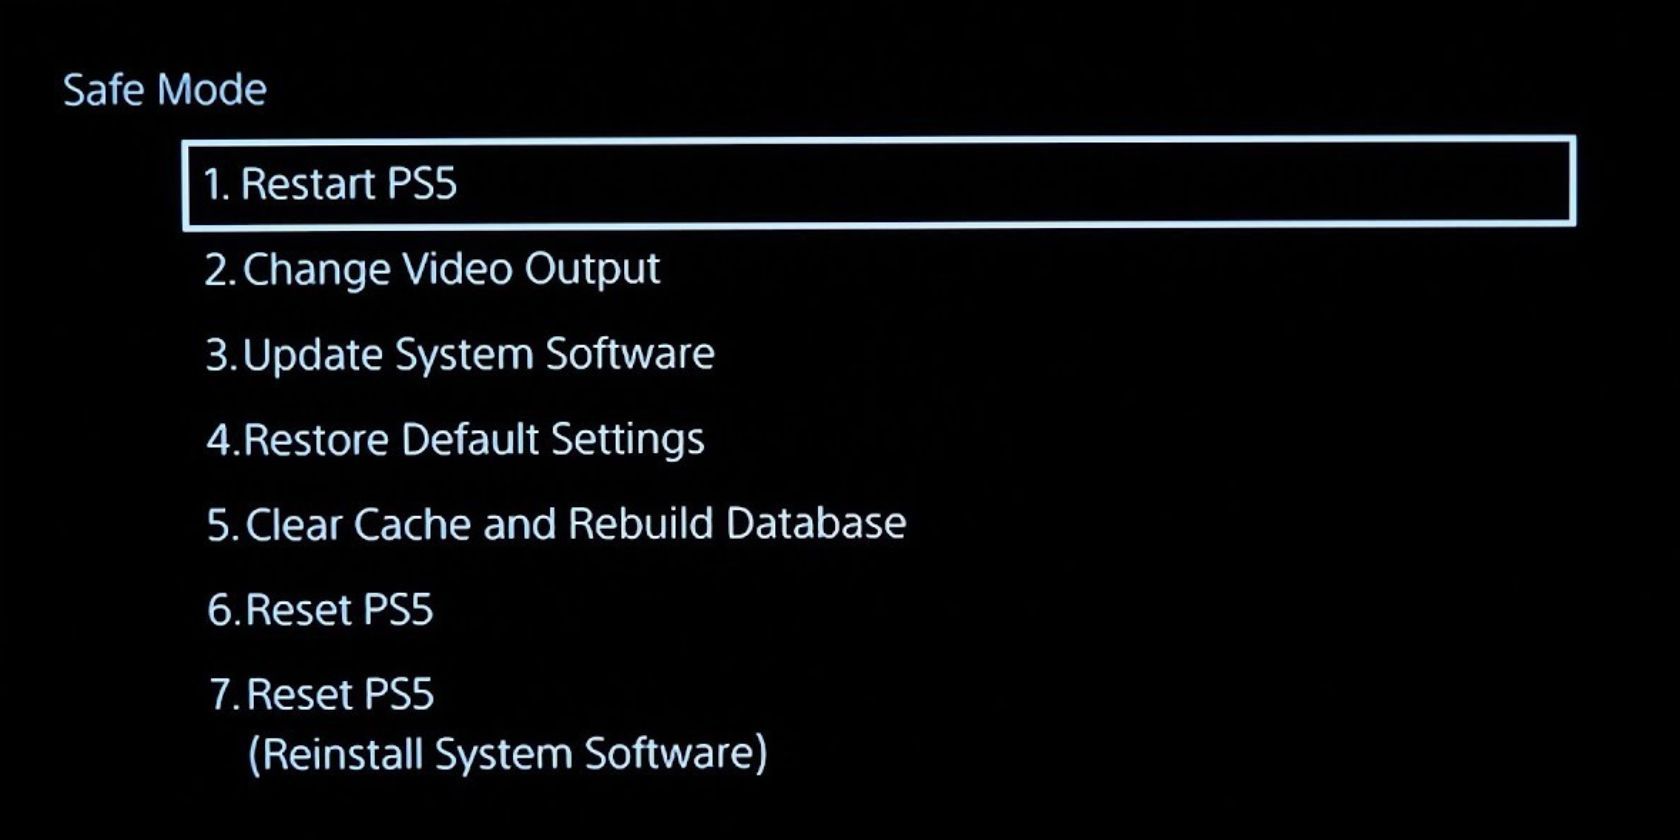 Safe Mode Menu On PS5 Console